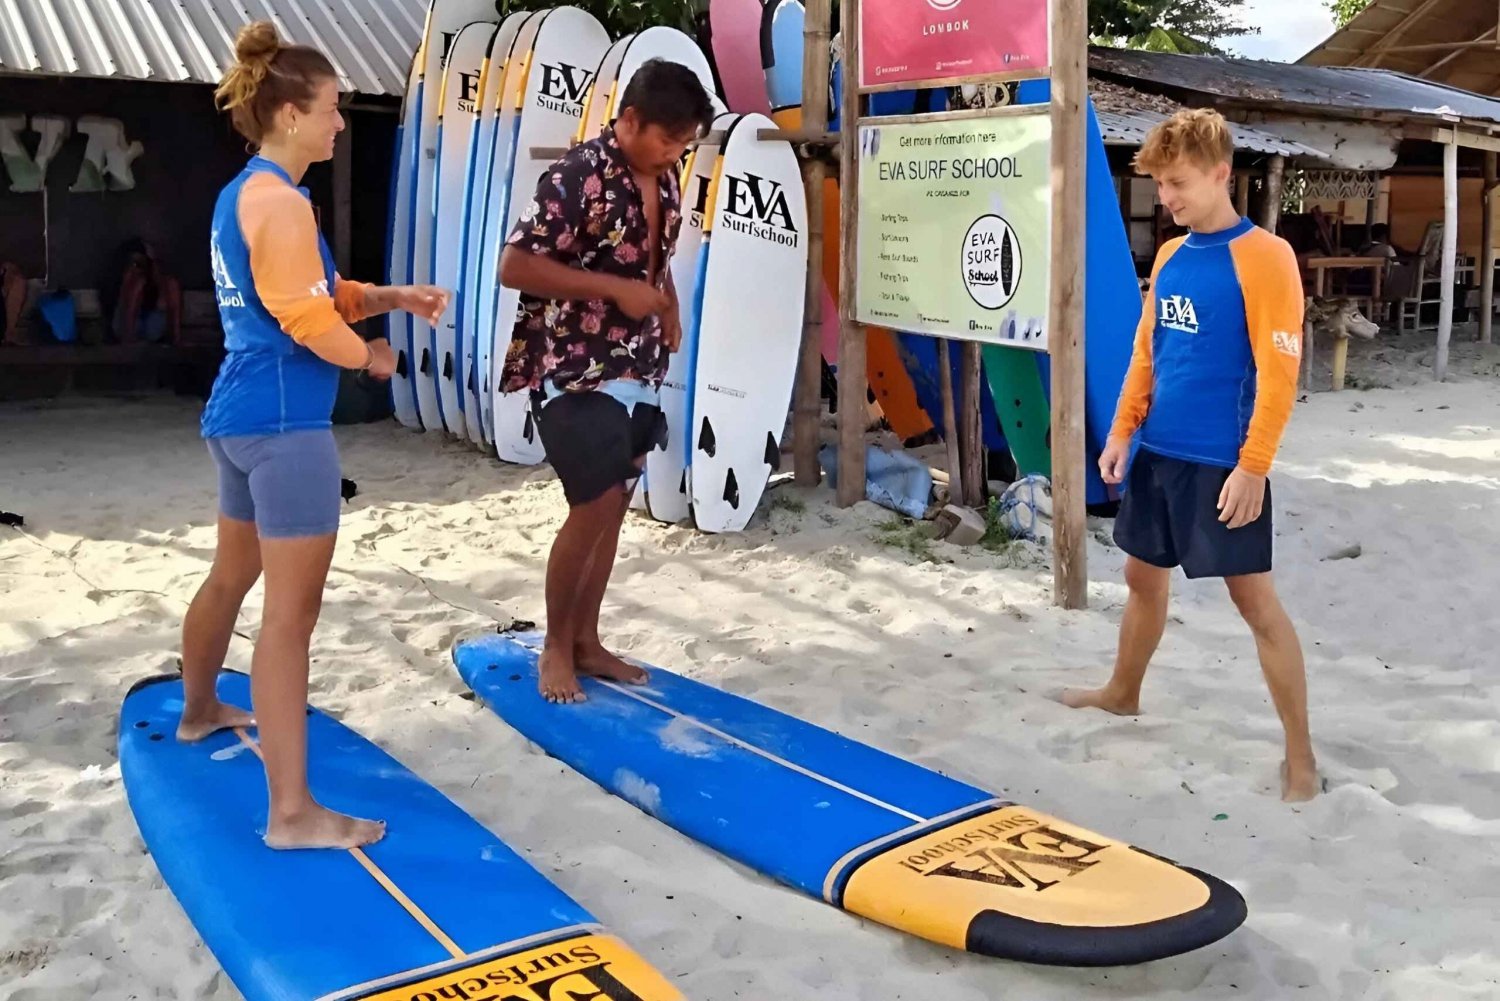 Lombok Surf lektion för nybörjare i Selong Blanak Beach